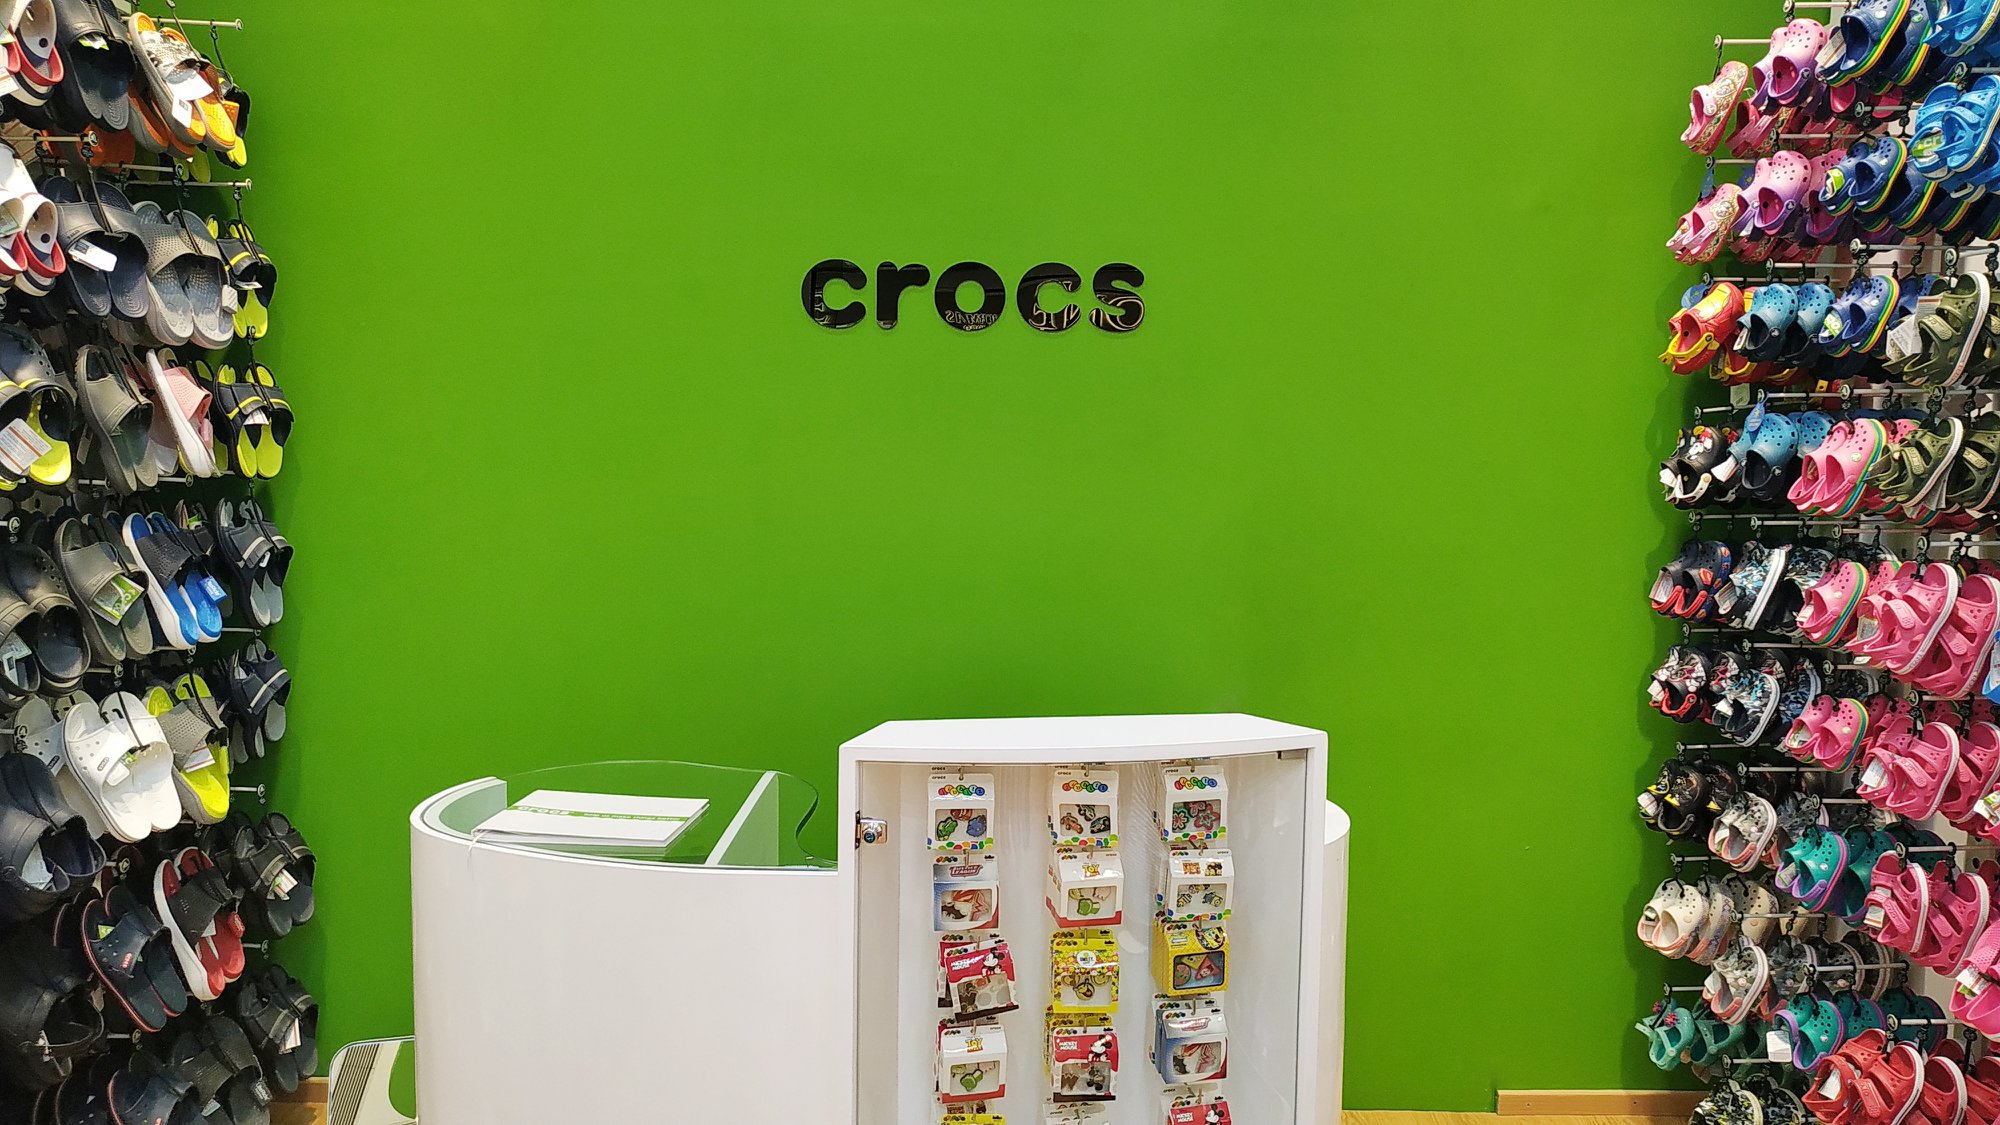 crocs city mall